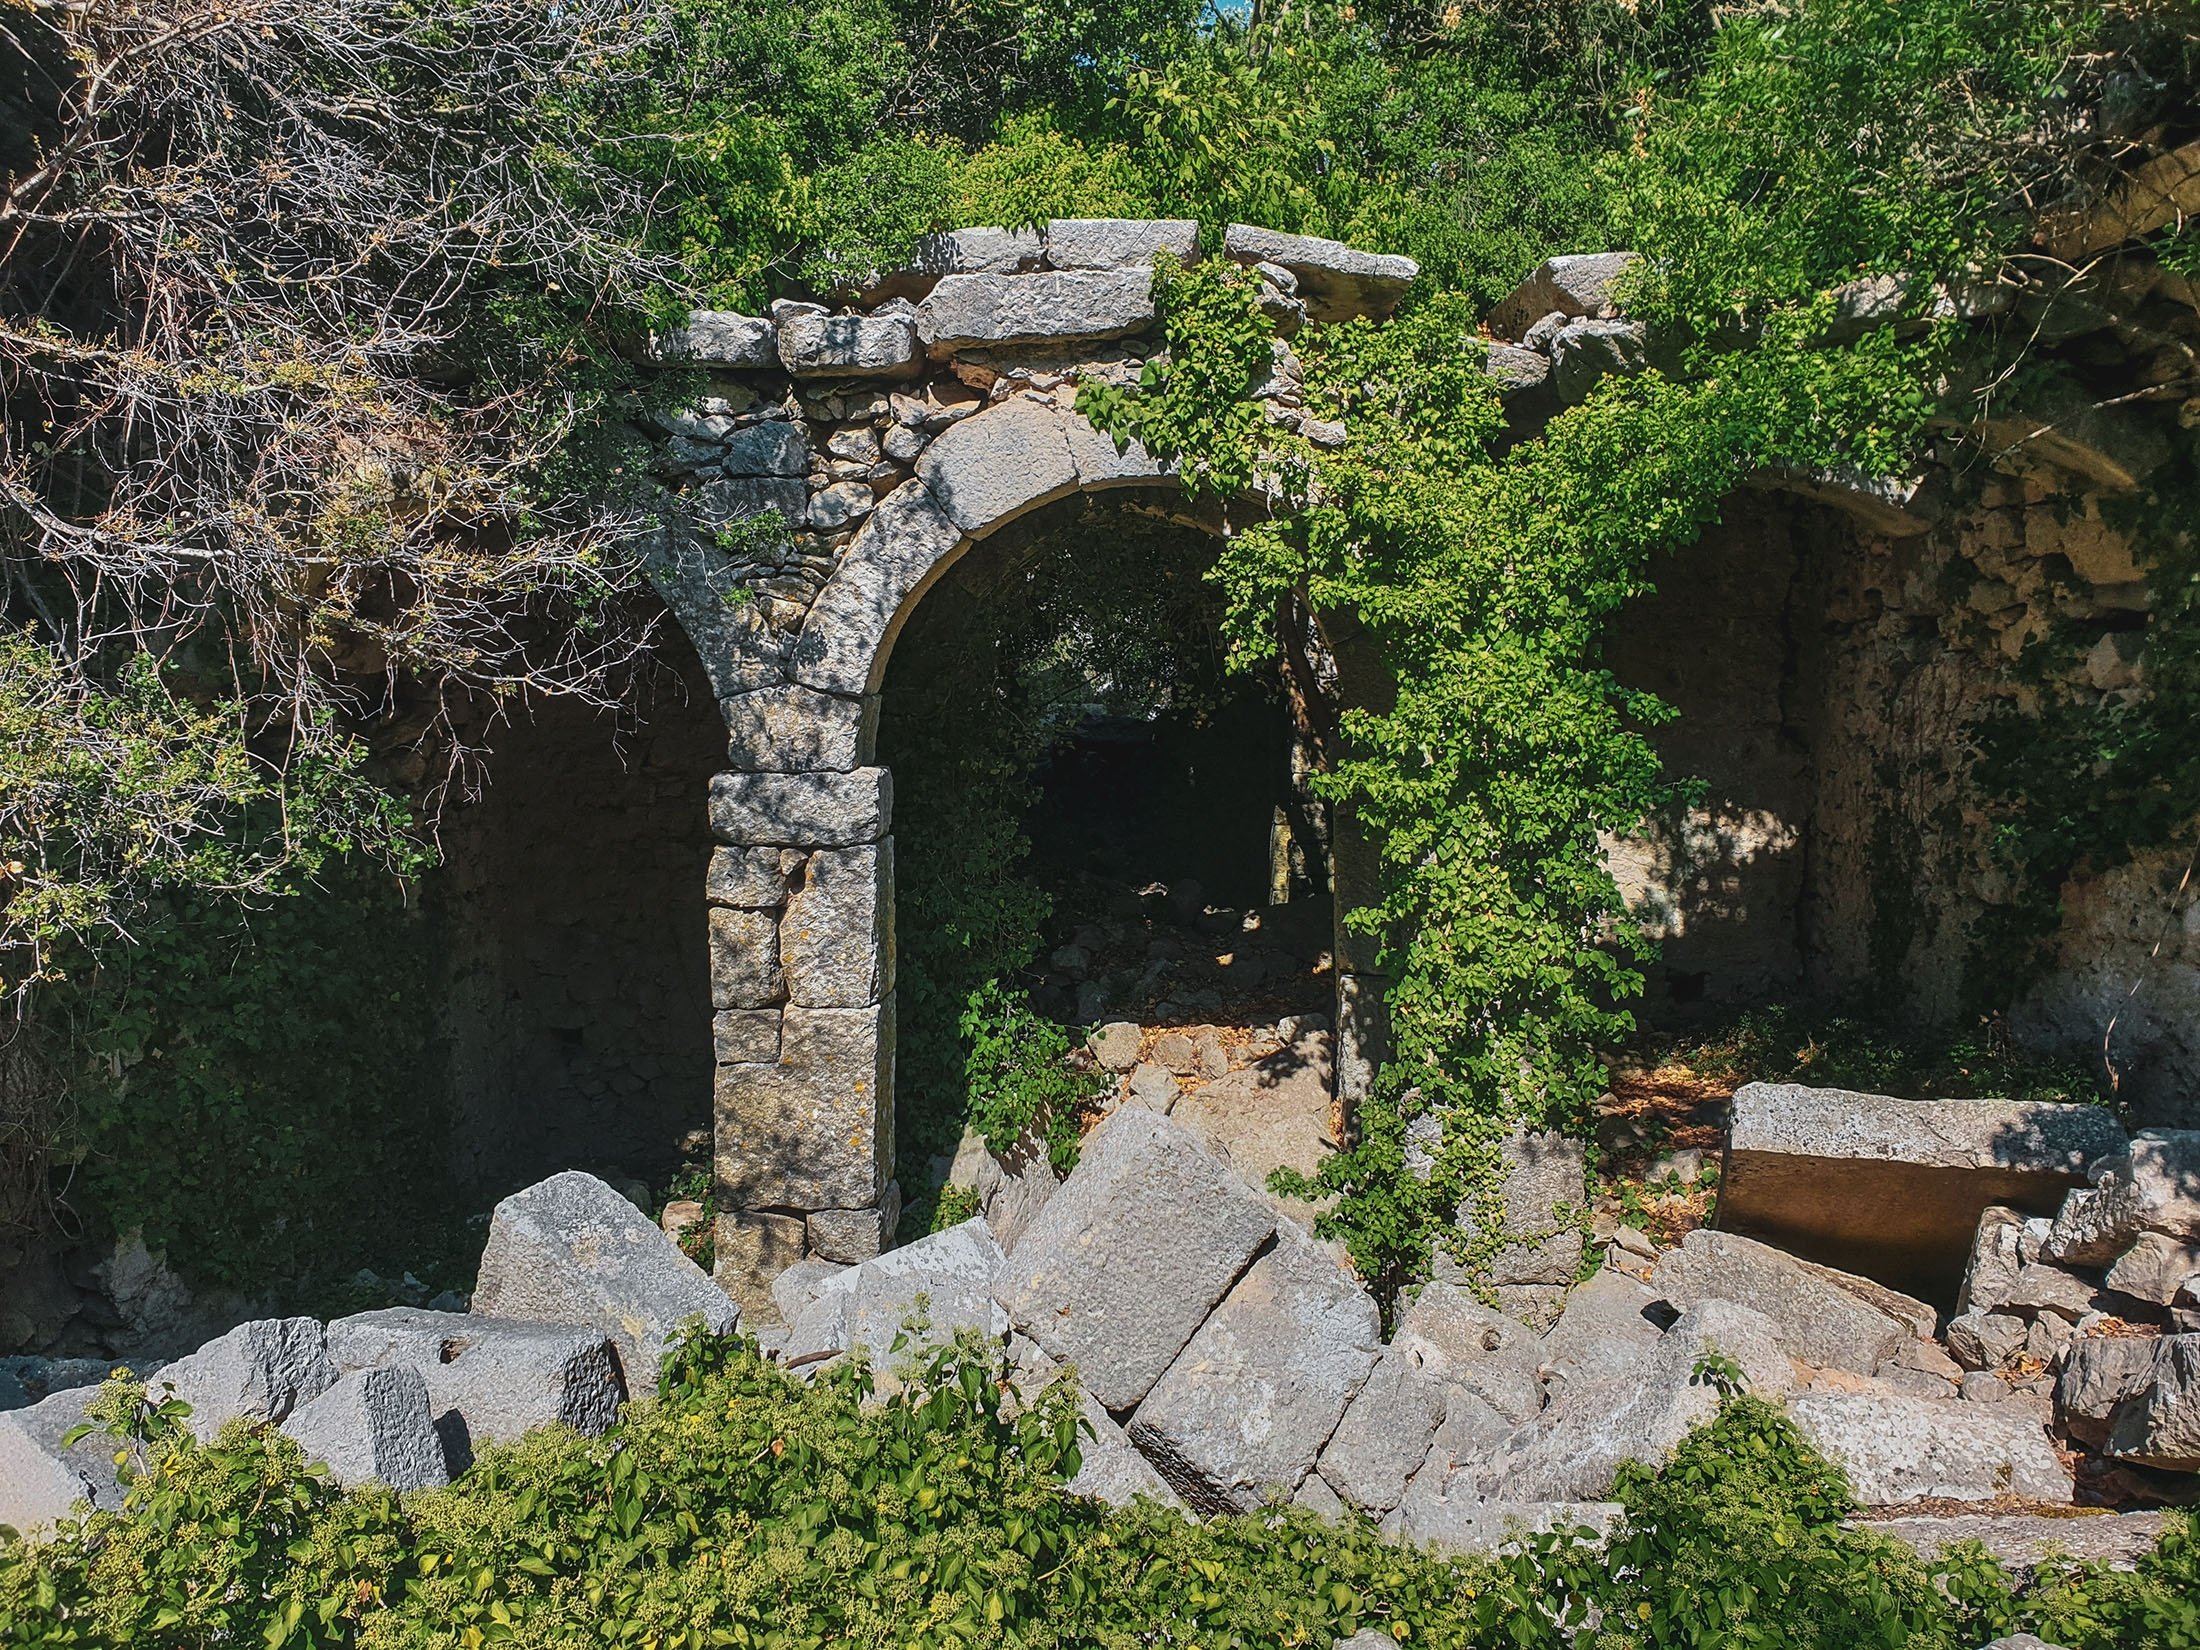 The ruins of the state building in Termessos, Antalya, Turkey. (Photo by Argun Konuk)